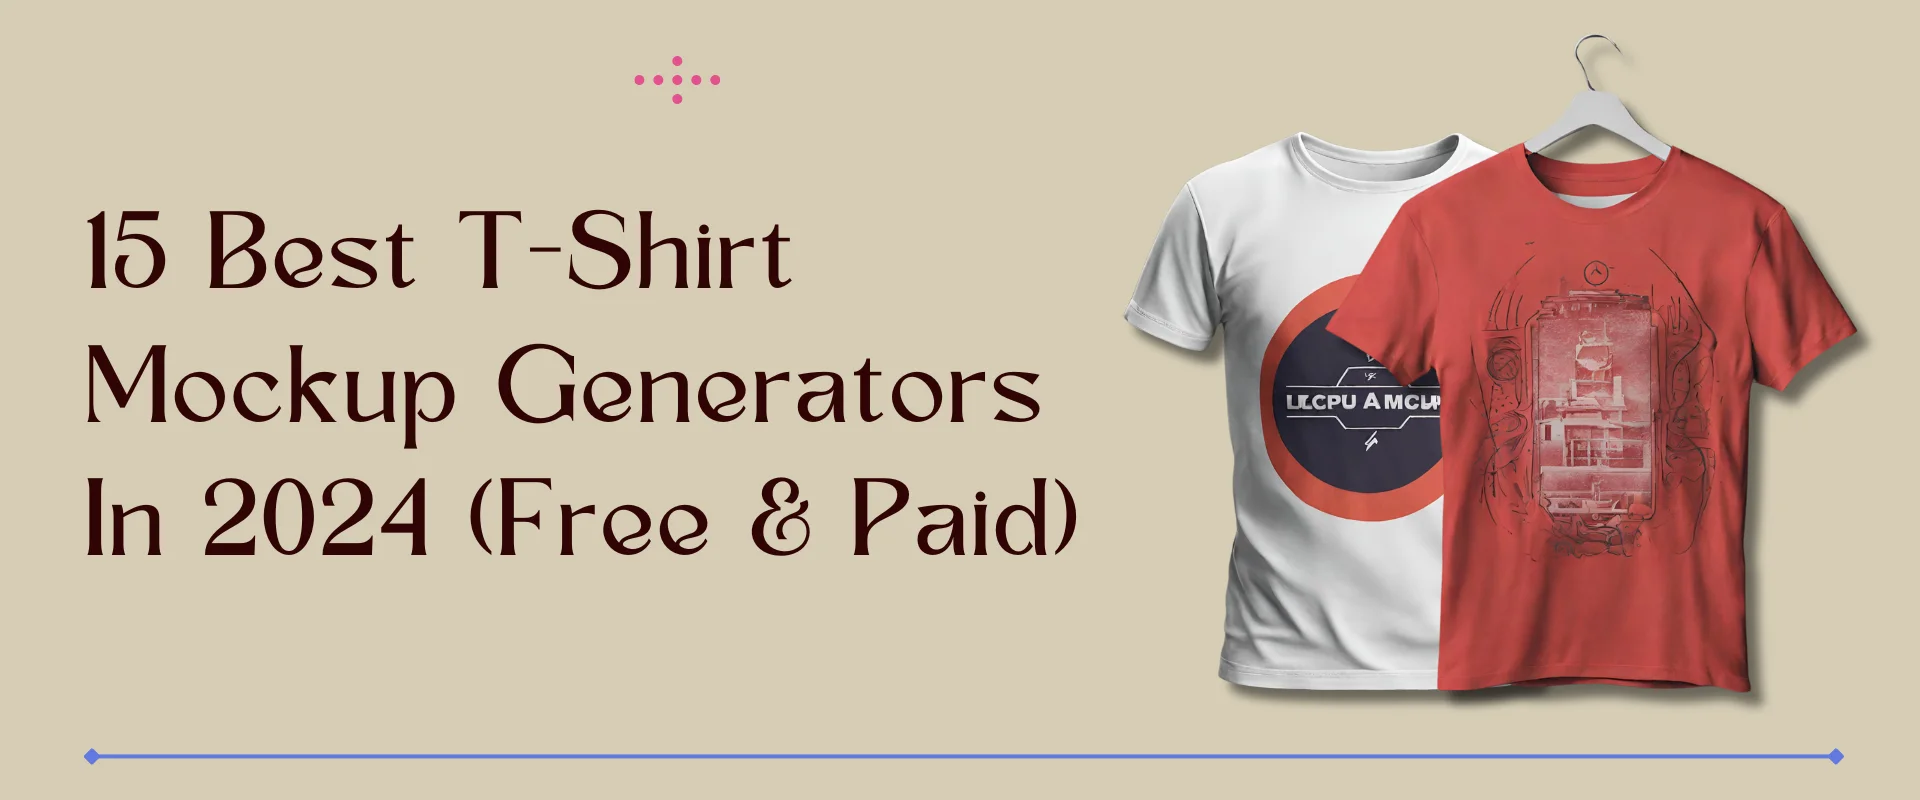 best t-shirt mockup generator